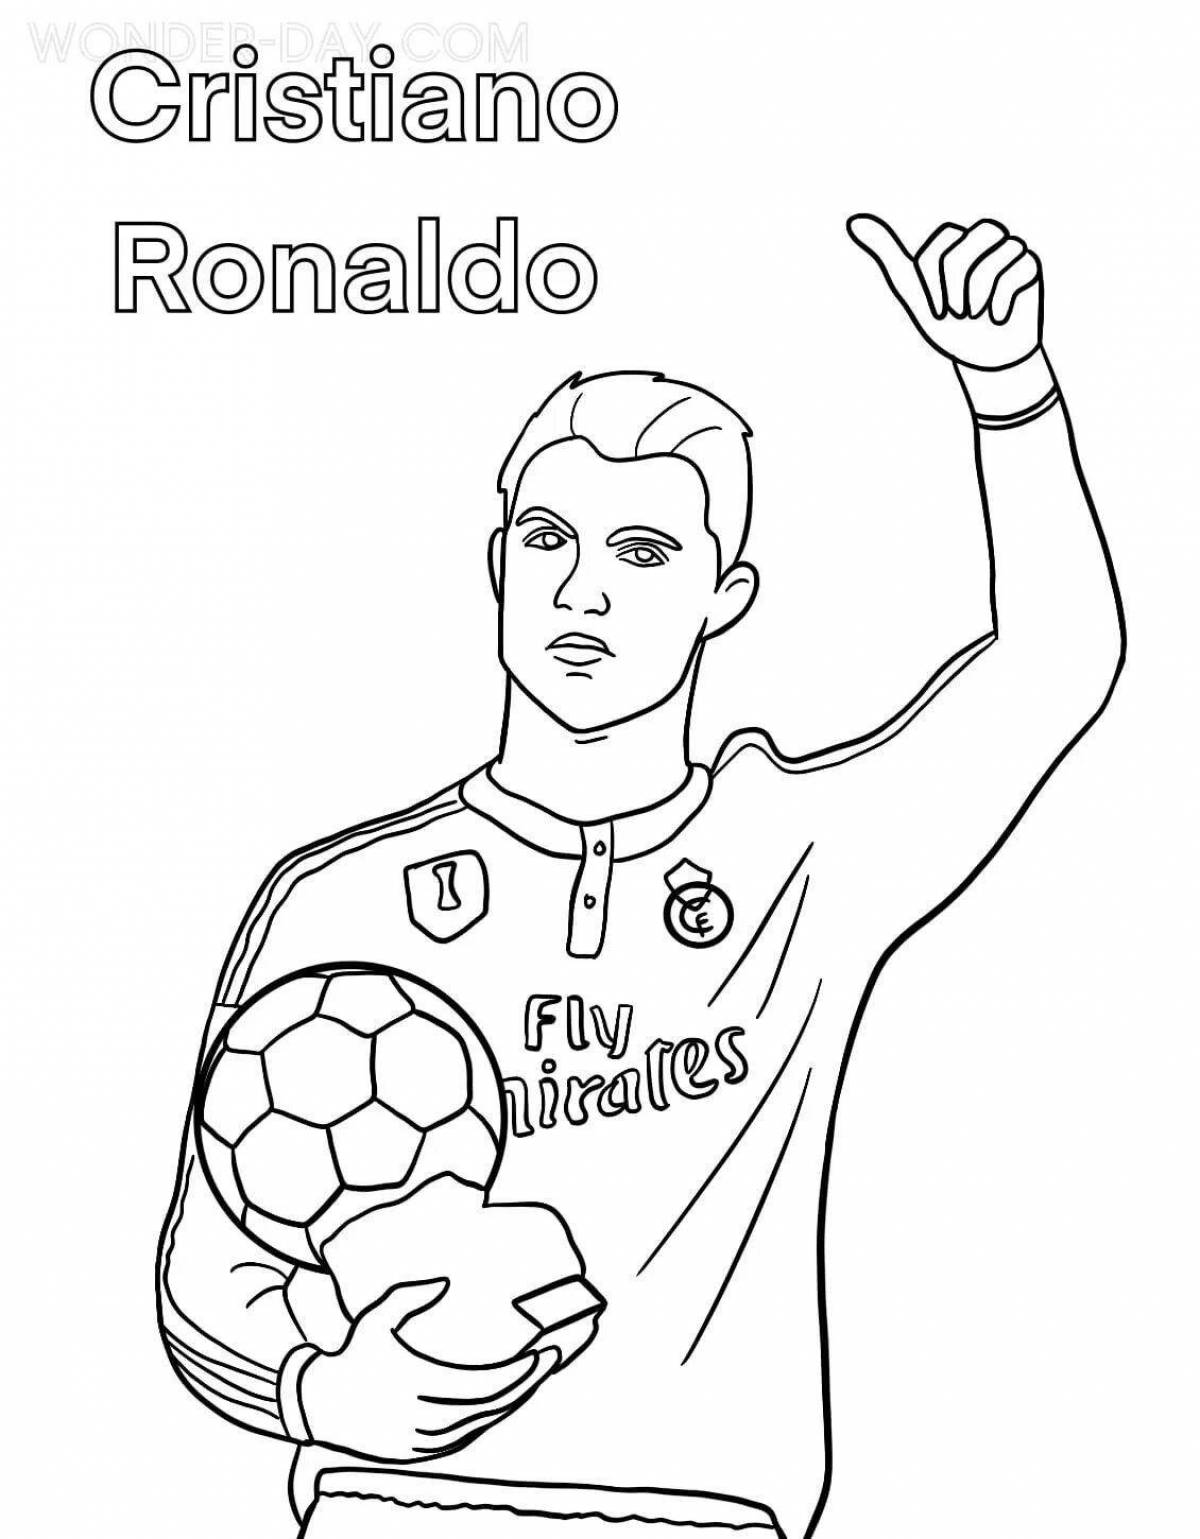 Coloring page mesmerizing soccer player ronaldo